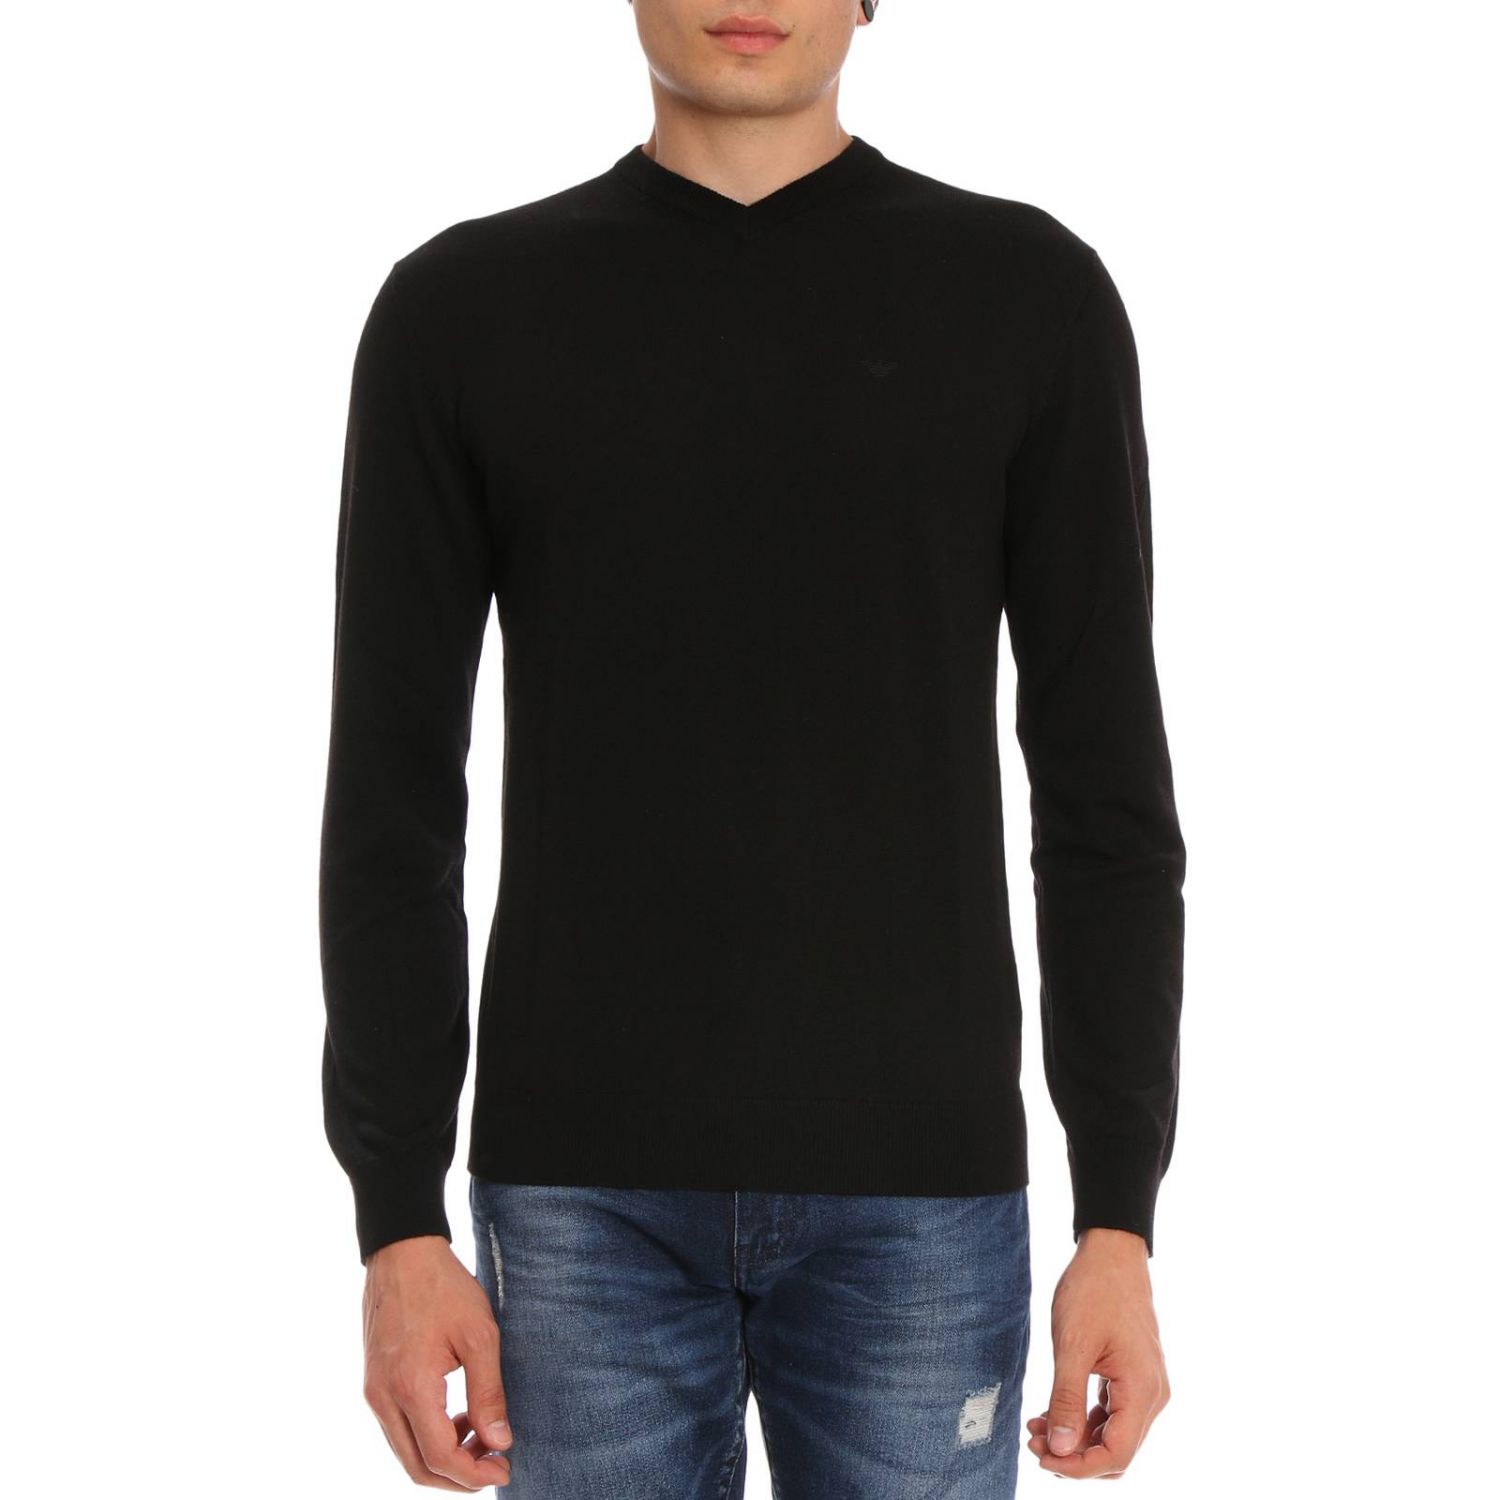 Emporio Armani Outlet: Sweater men | Sweater Emporio Armani Men Black ...